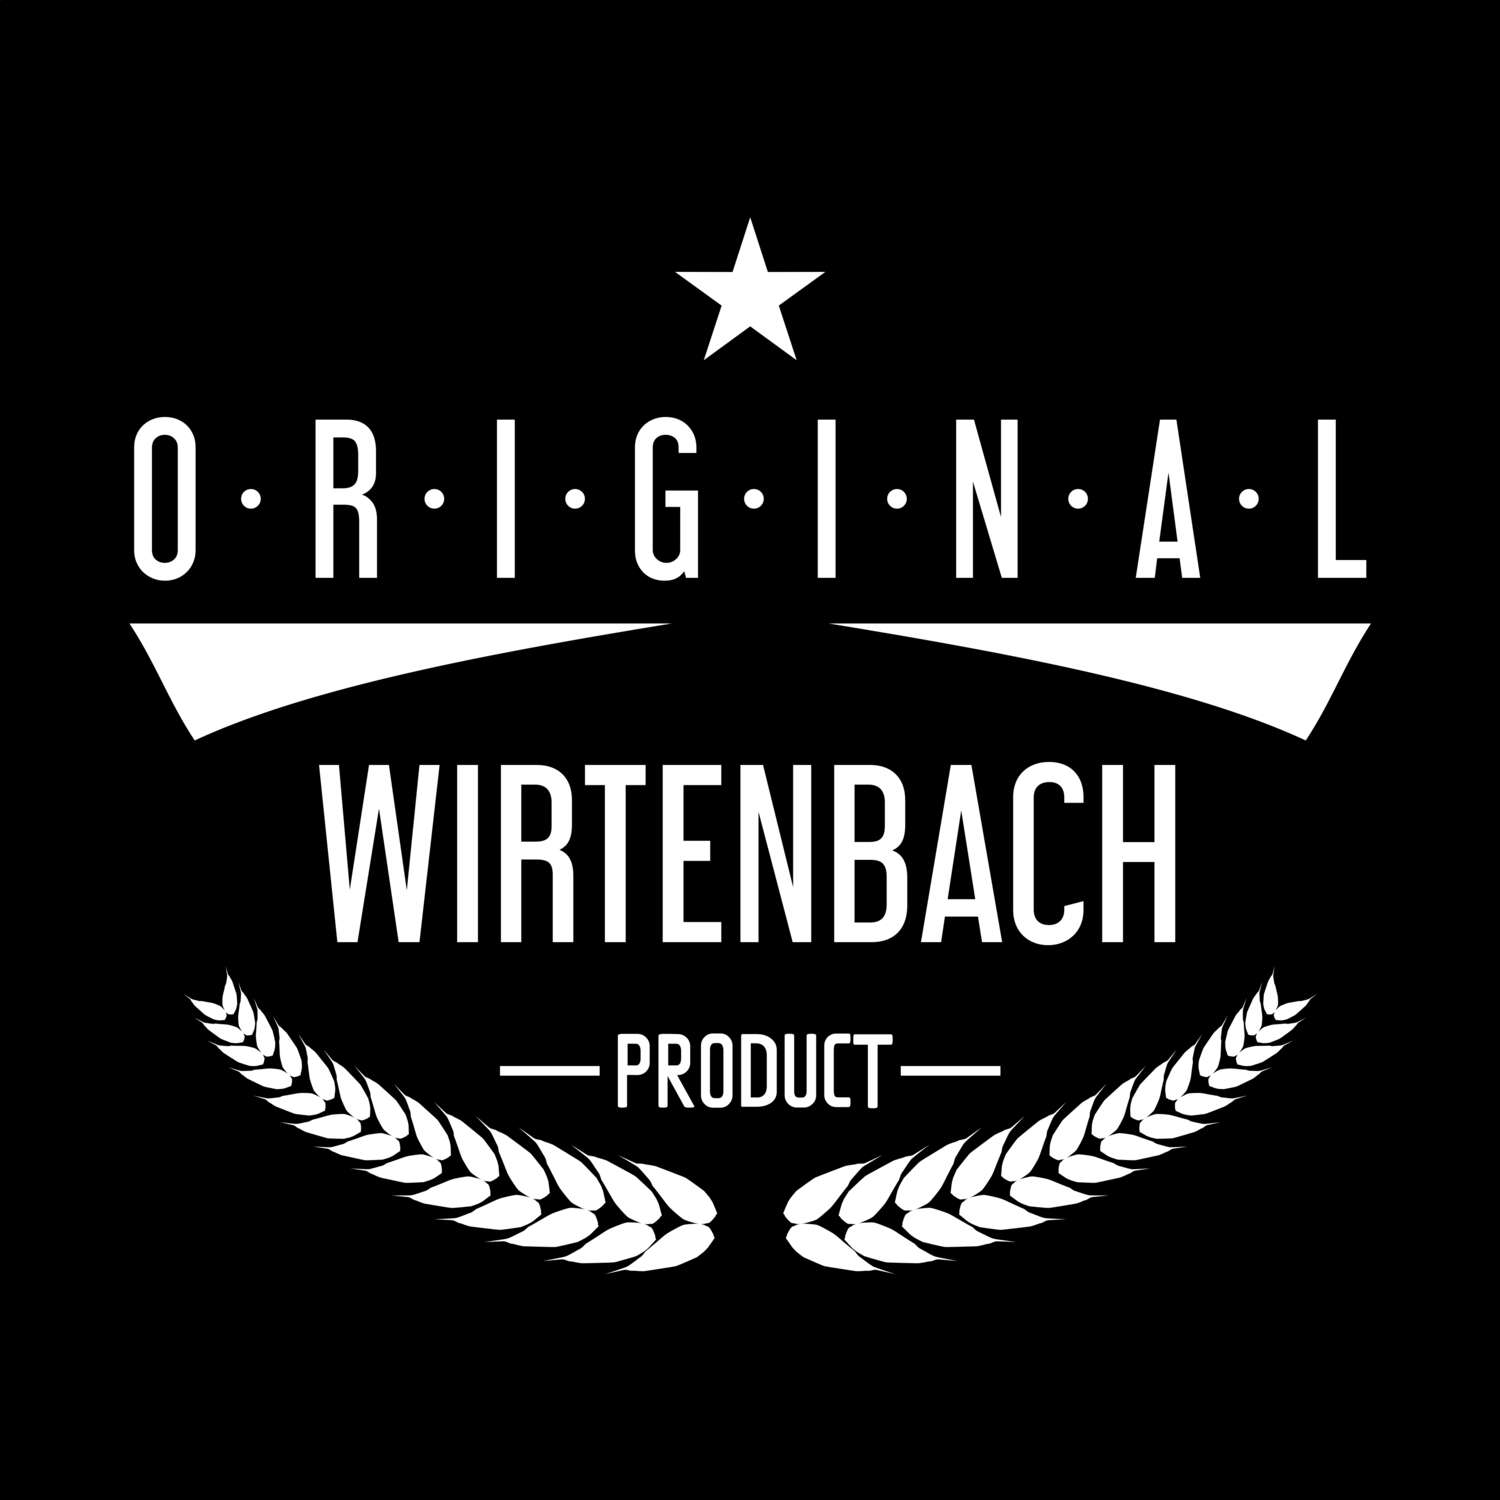 Wirtenbach T-Shirt »Original Product«